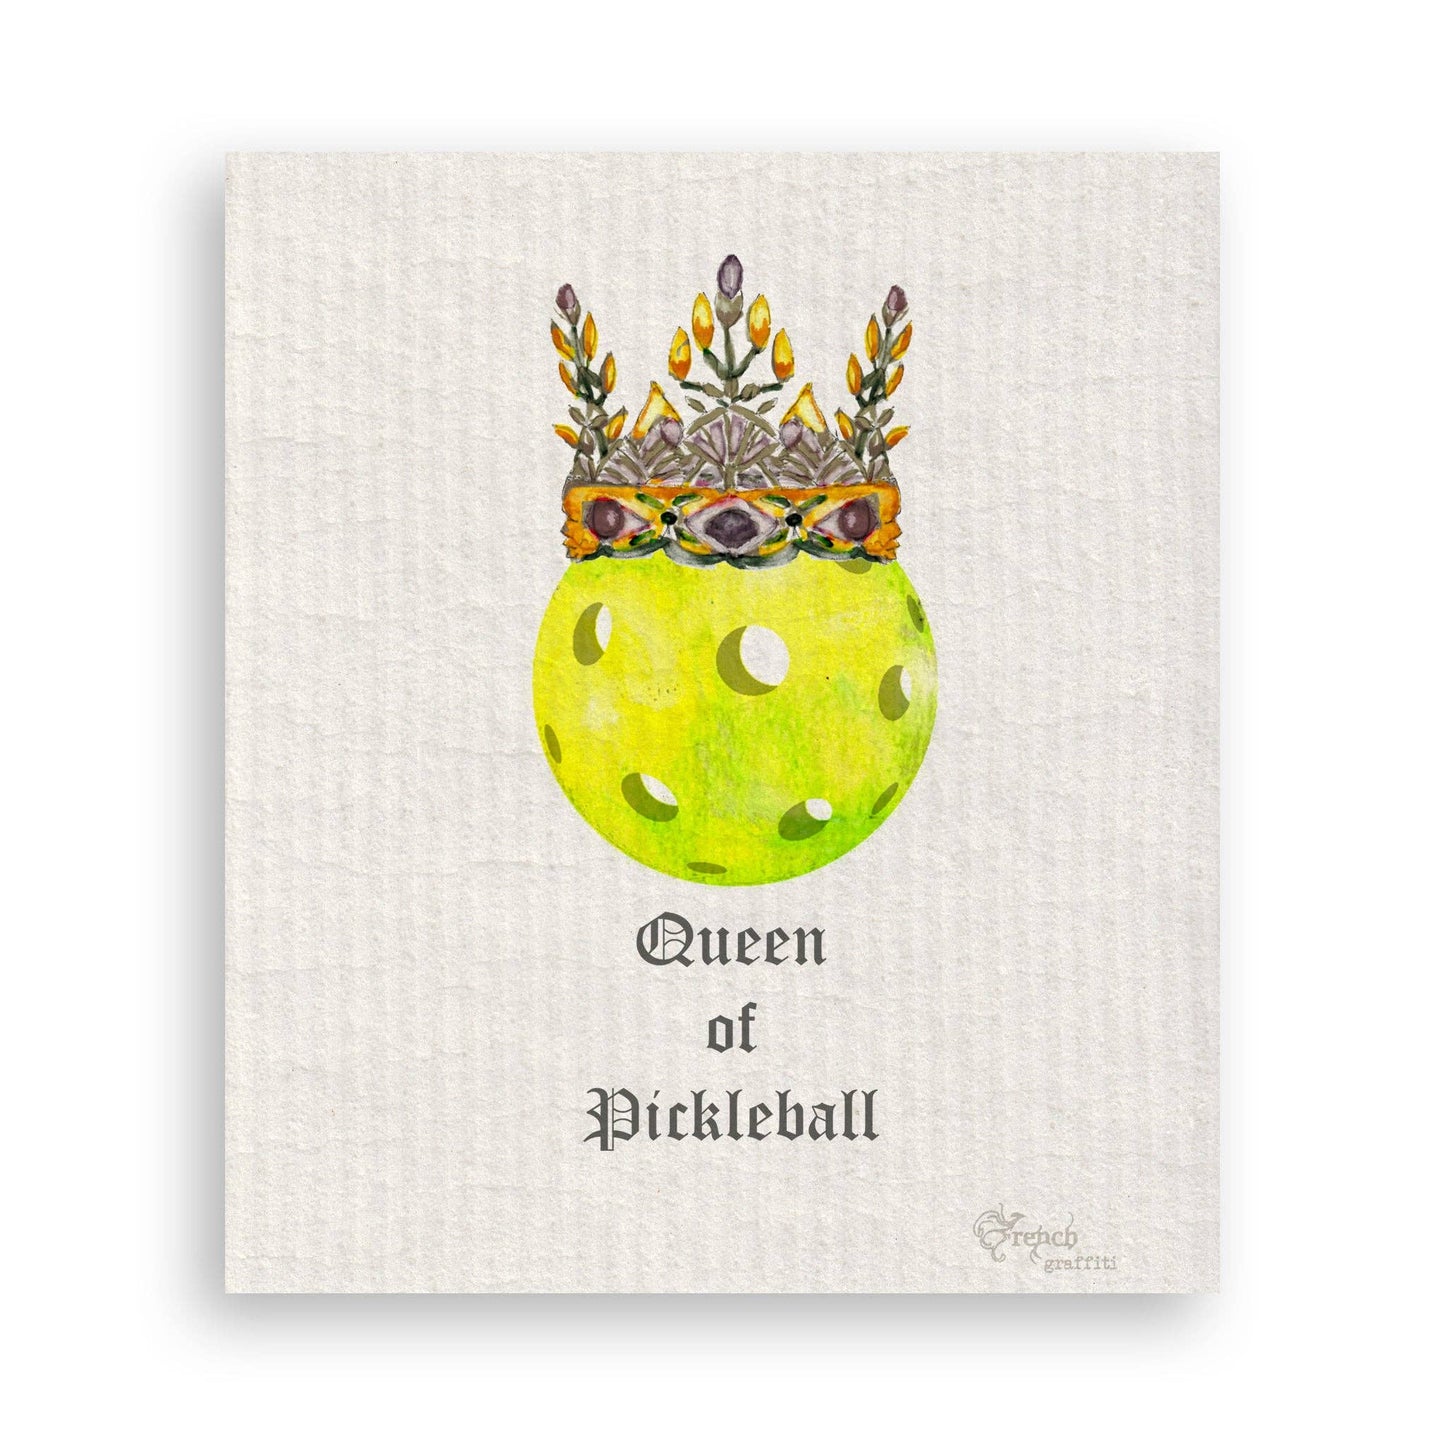 Queen of Pickleball